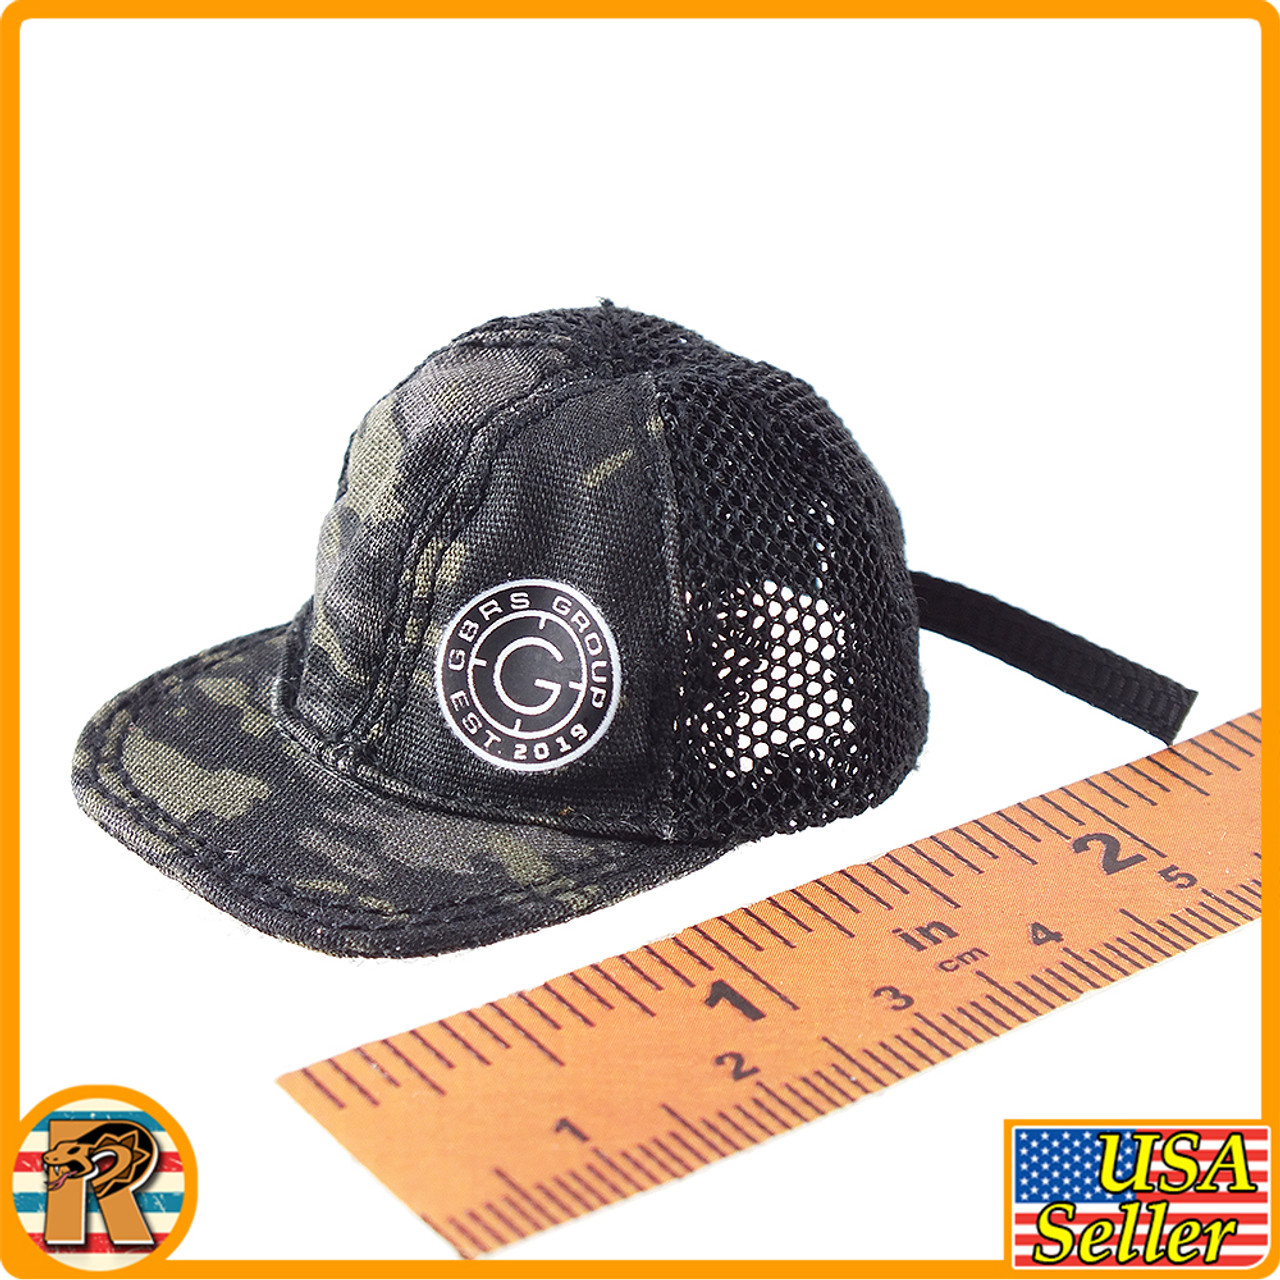 S Veteran Tactical Instructor - Ballcap Hat - 1/6 Scale -